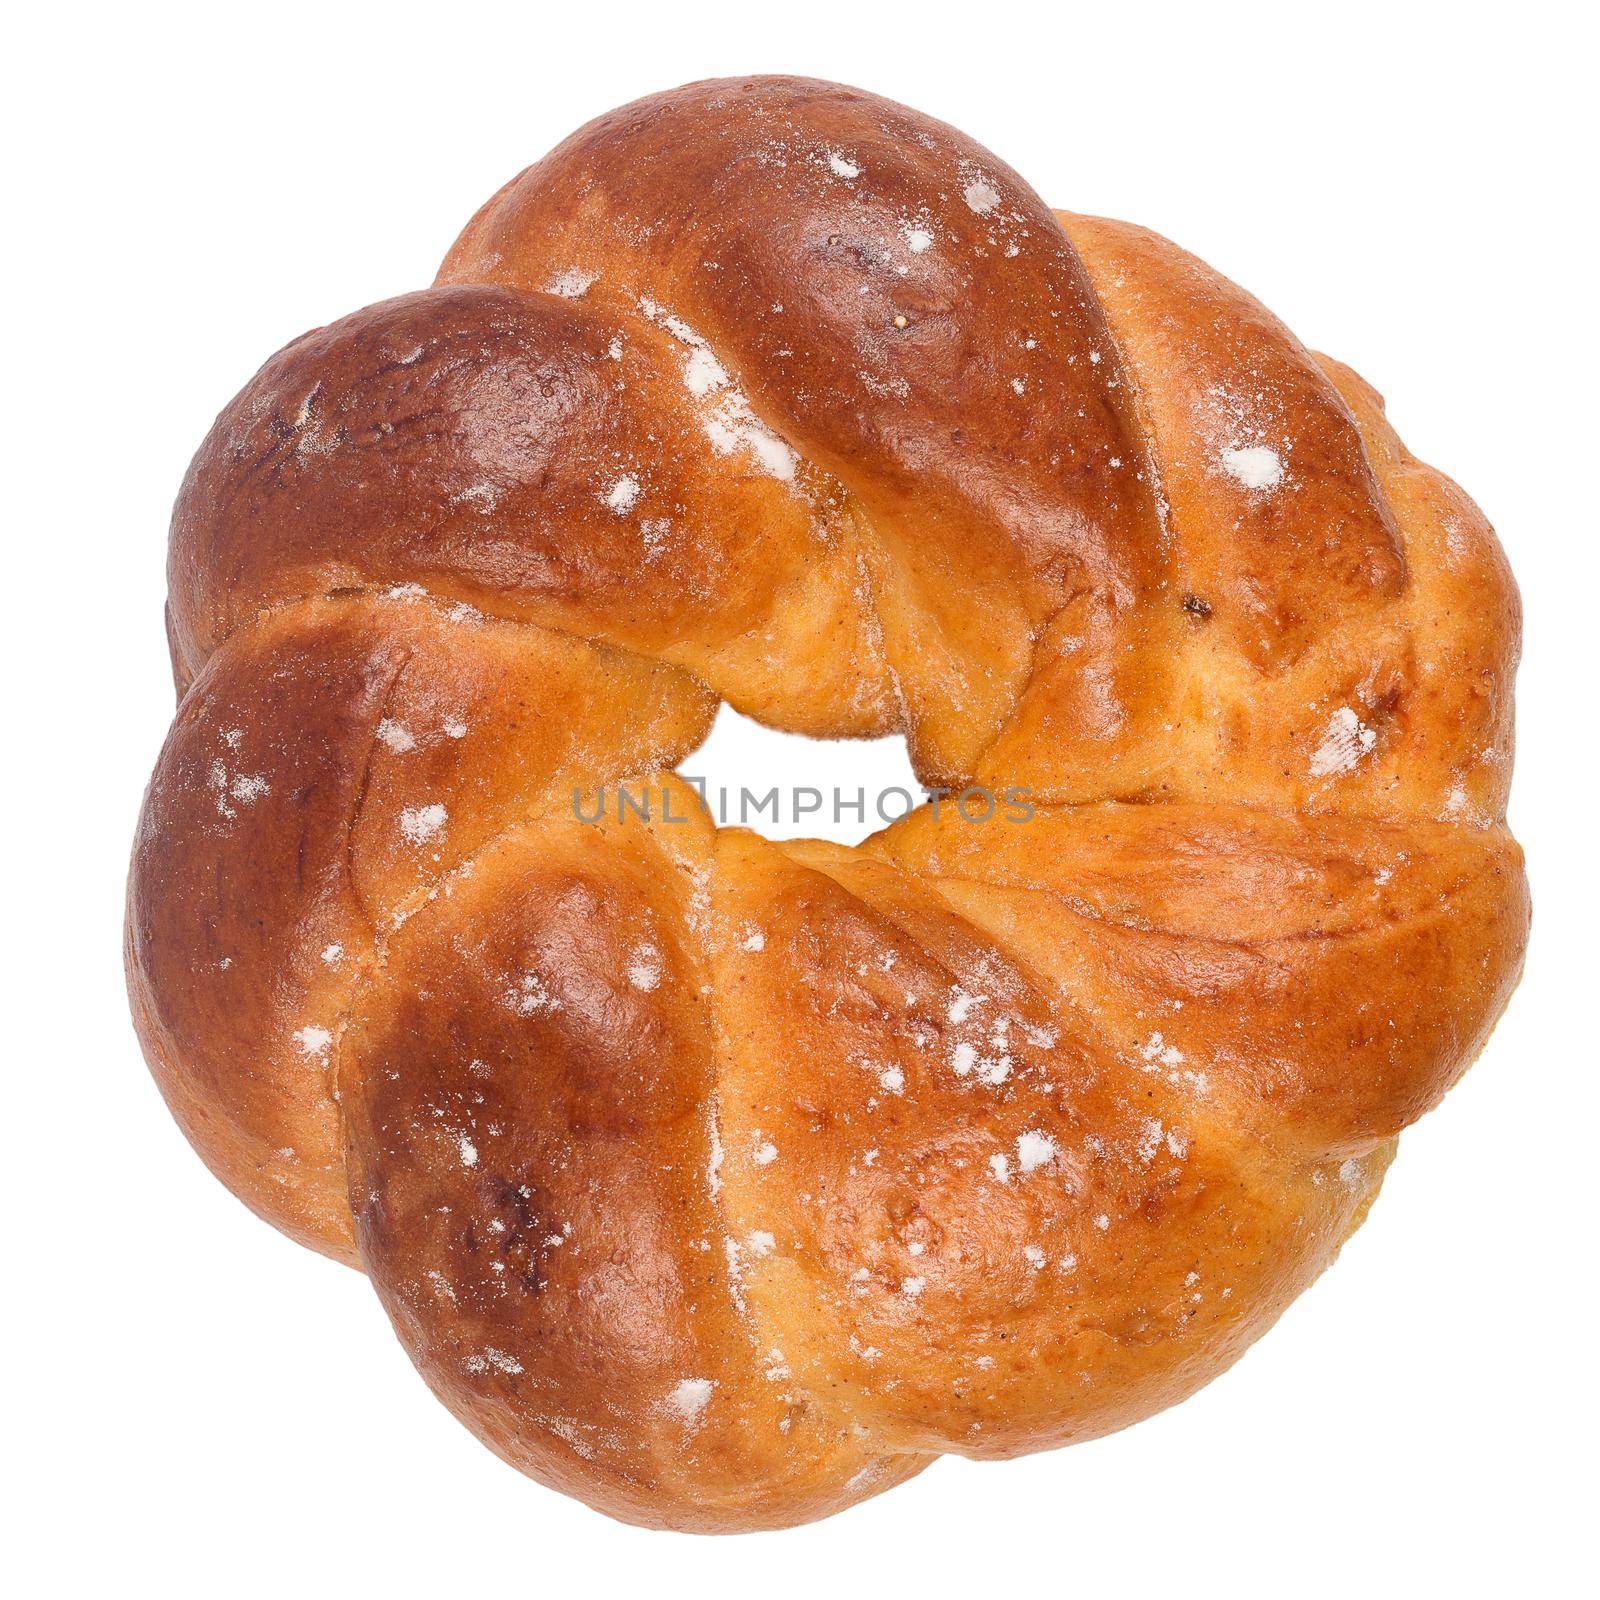 Sweet bread  by homydesign